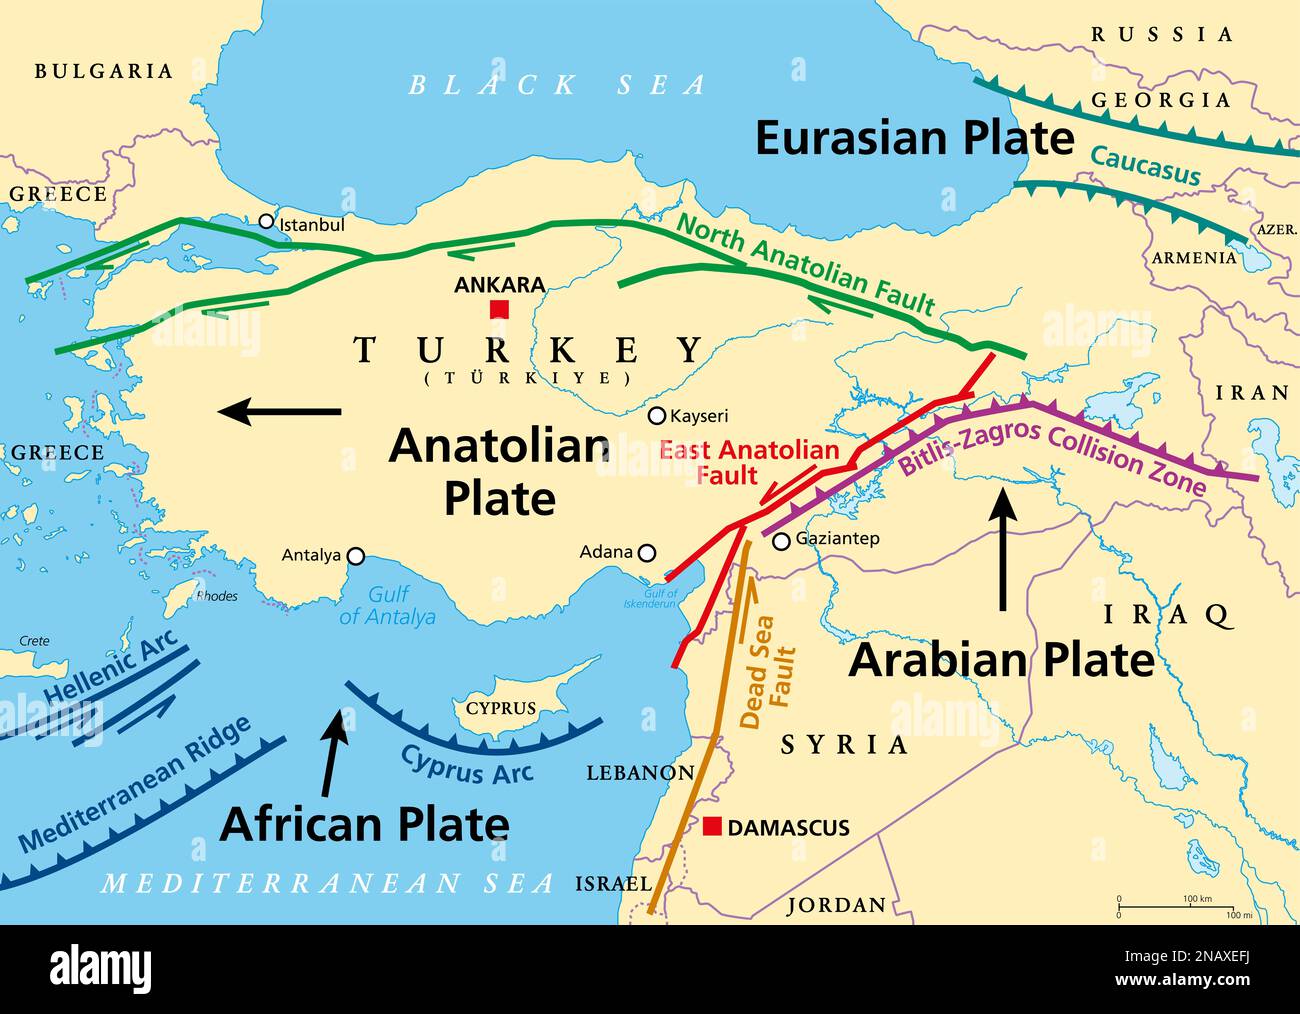 Anatolian Plate Tectonics Mapa La Mayor Parte Del Pais De Turquia Se Encuentra En Esta Placa Tectonica Continental 2naxefj 